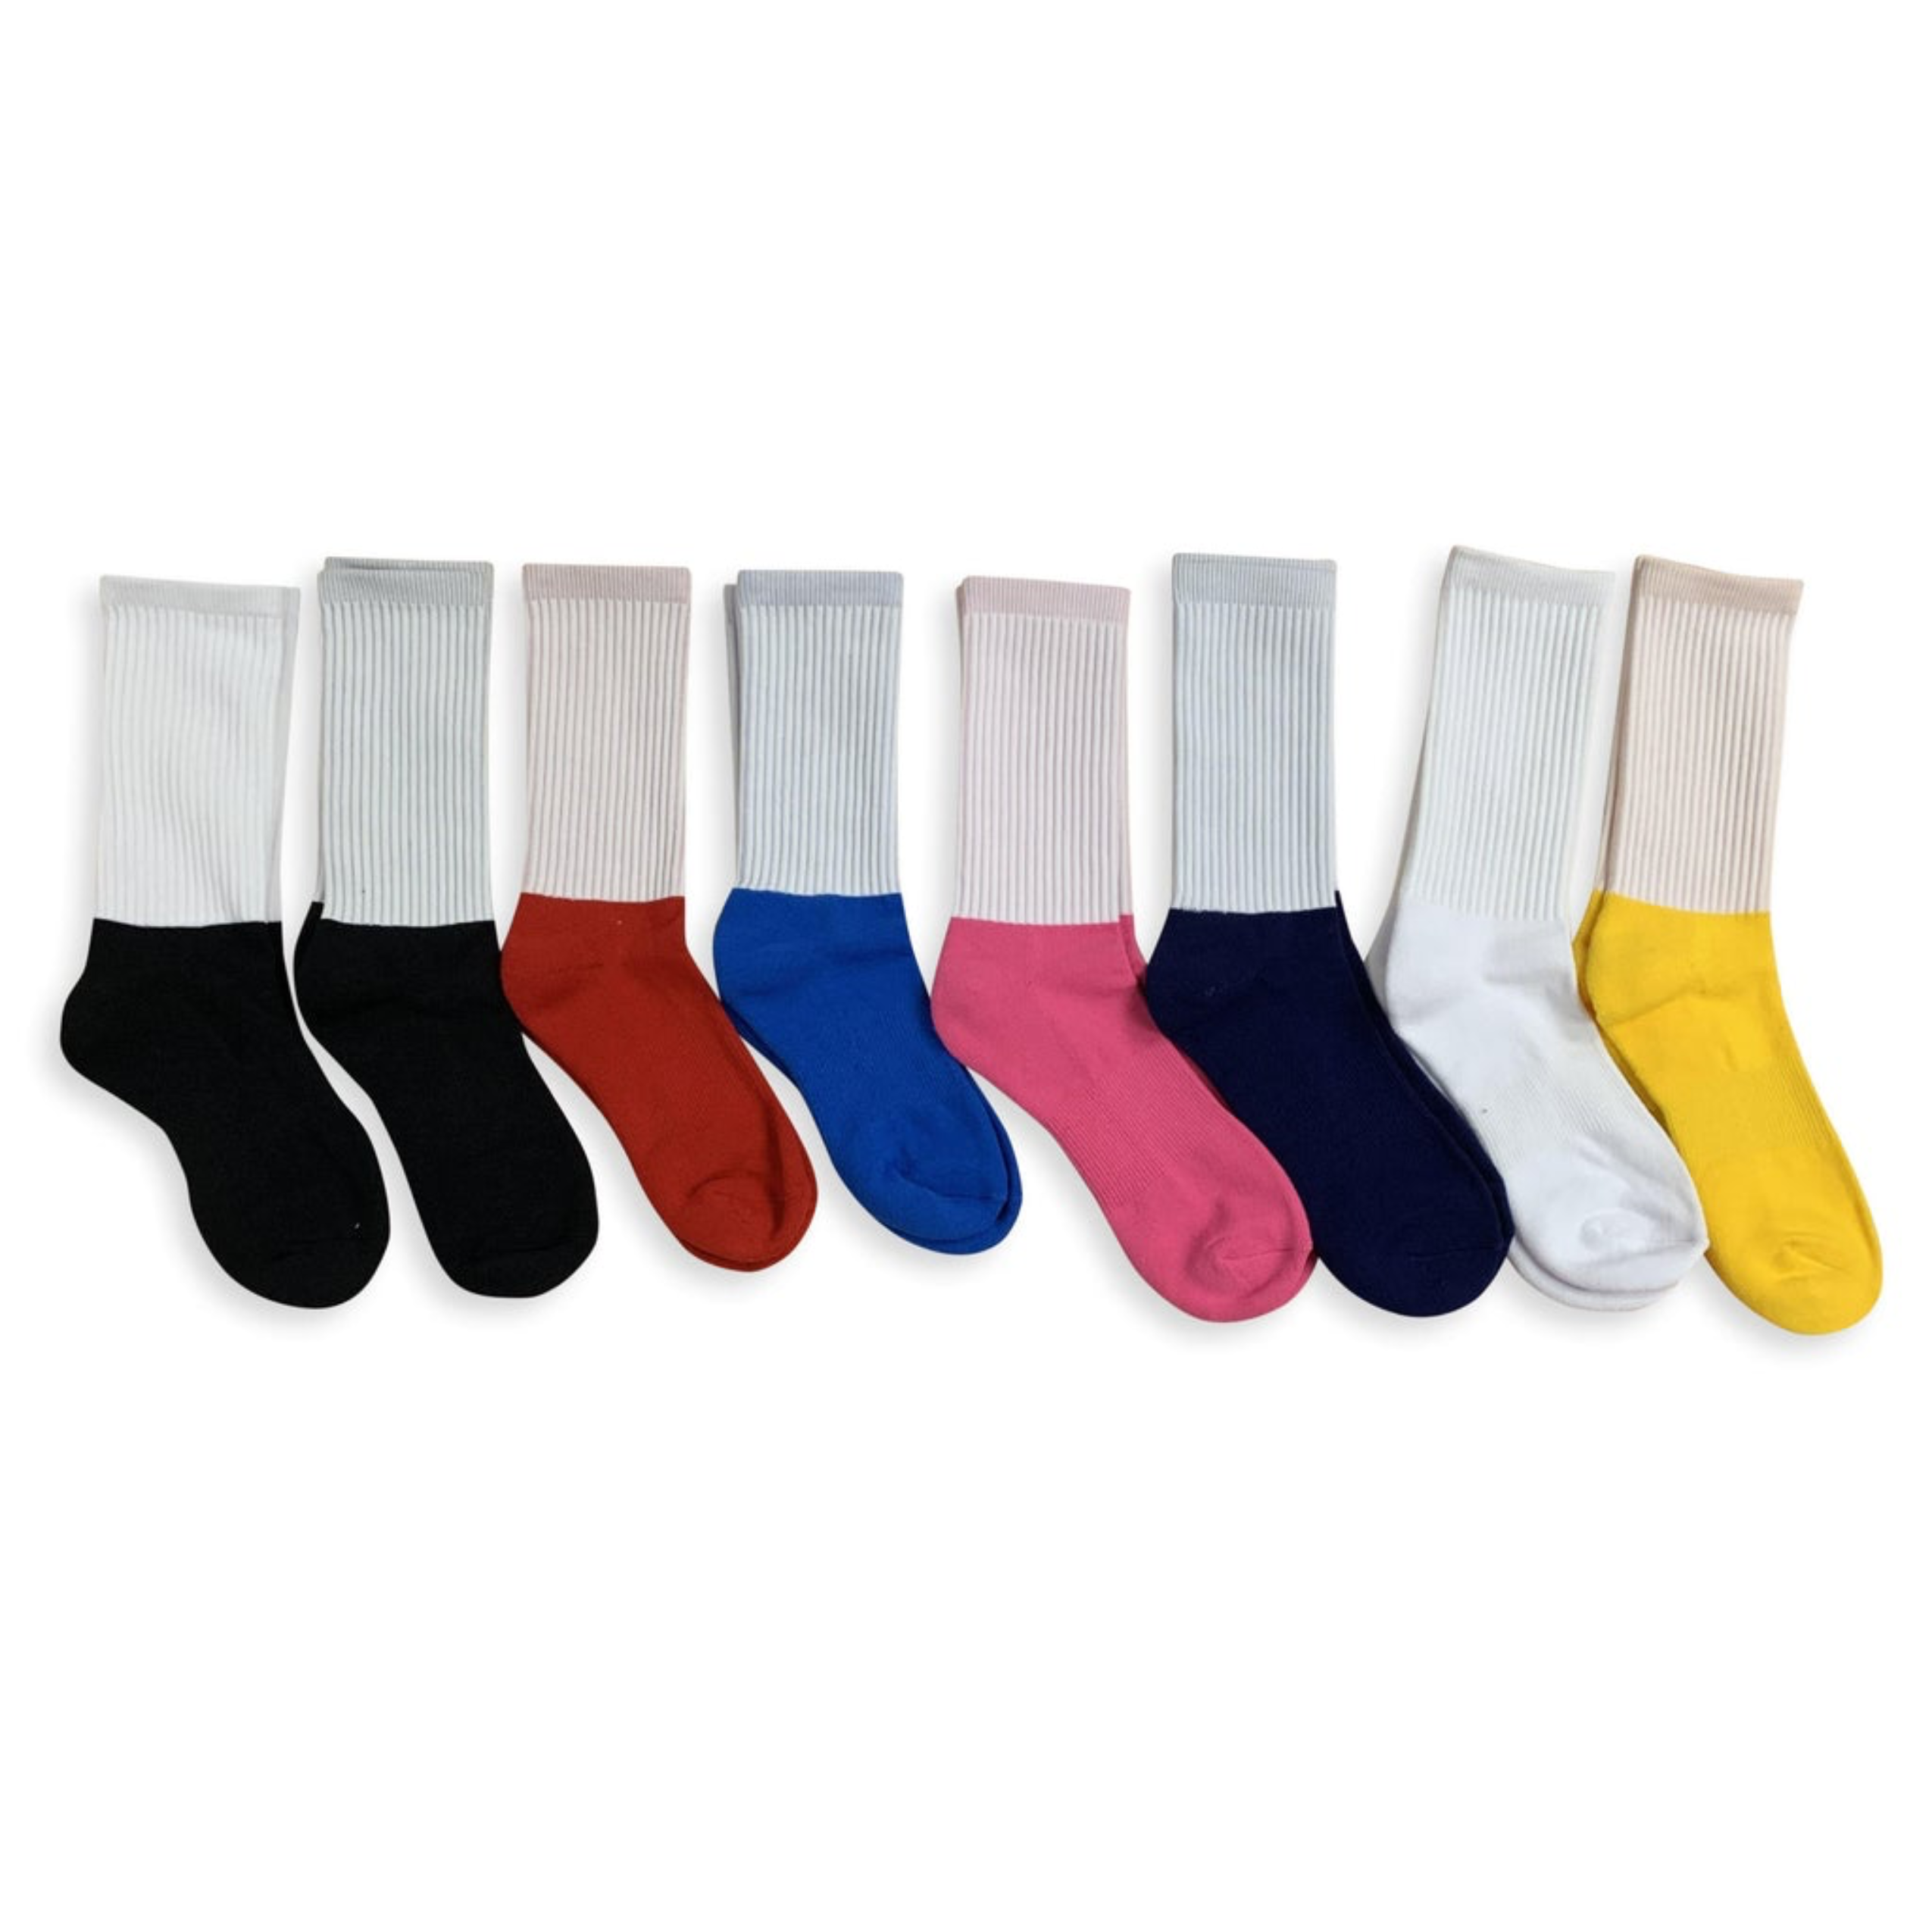 Customized Athletic Crew Socks